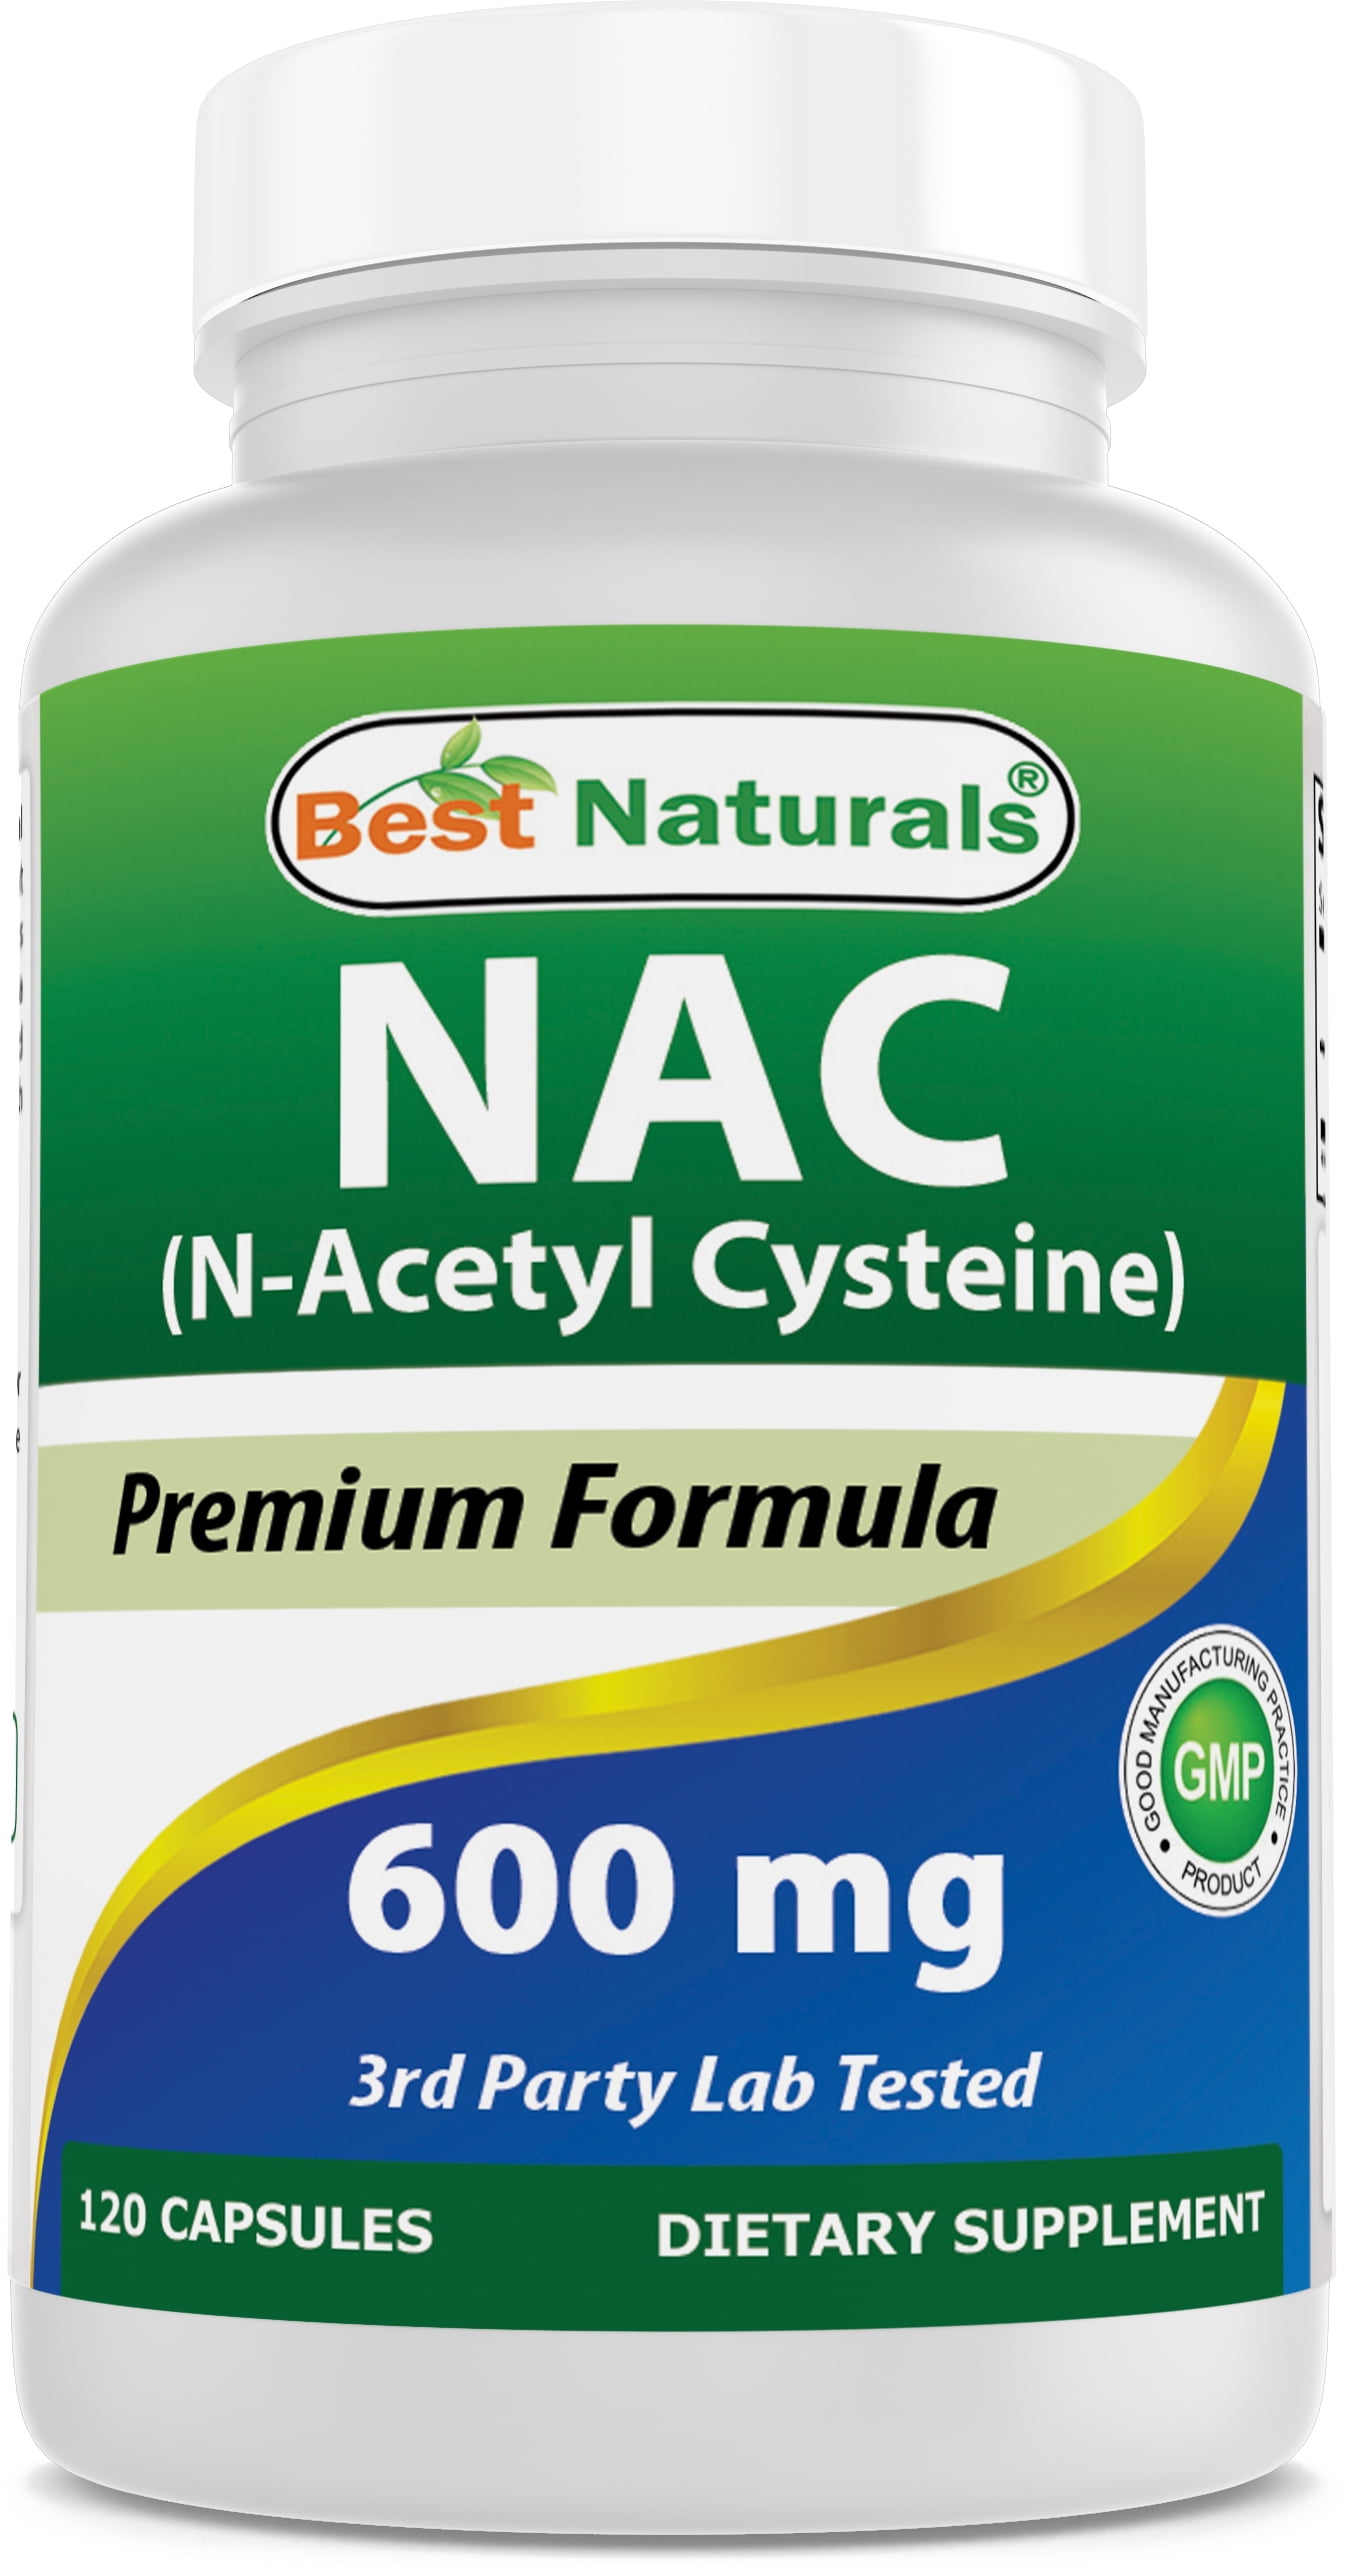 Best Naturals NAC (N-Acetyl Cysteine) 600 mg 120 Capsules